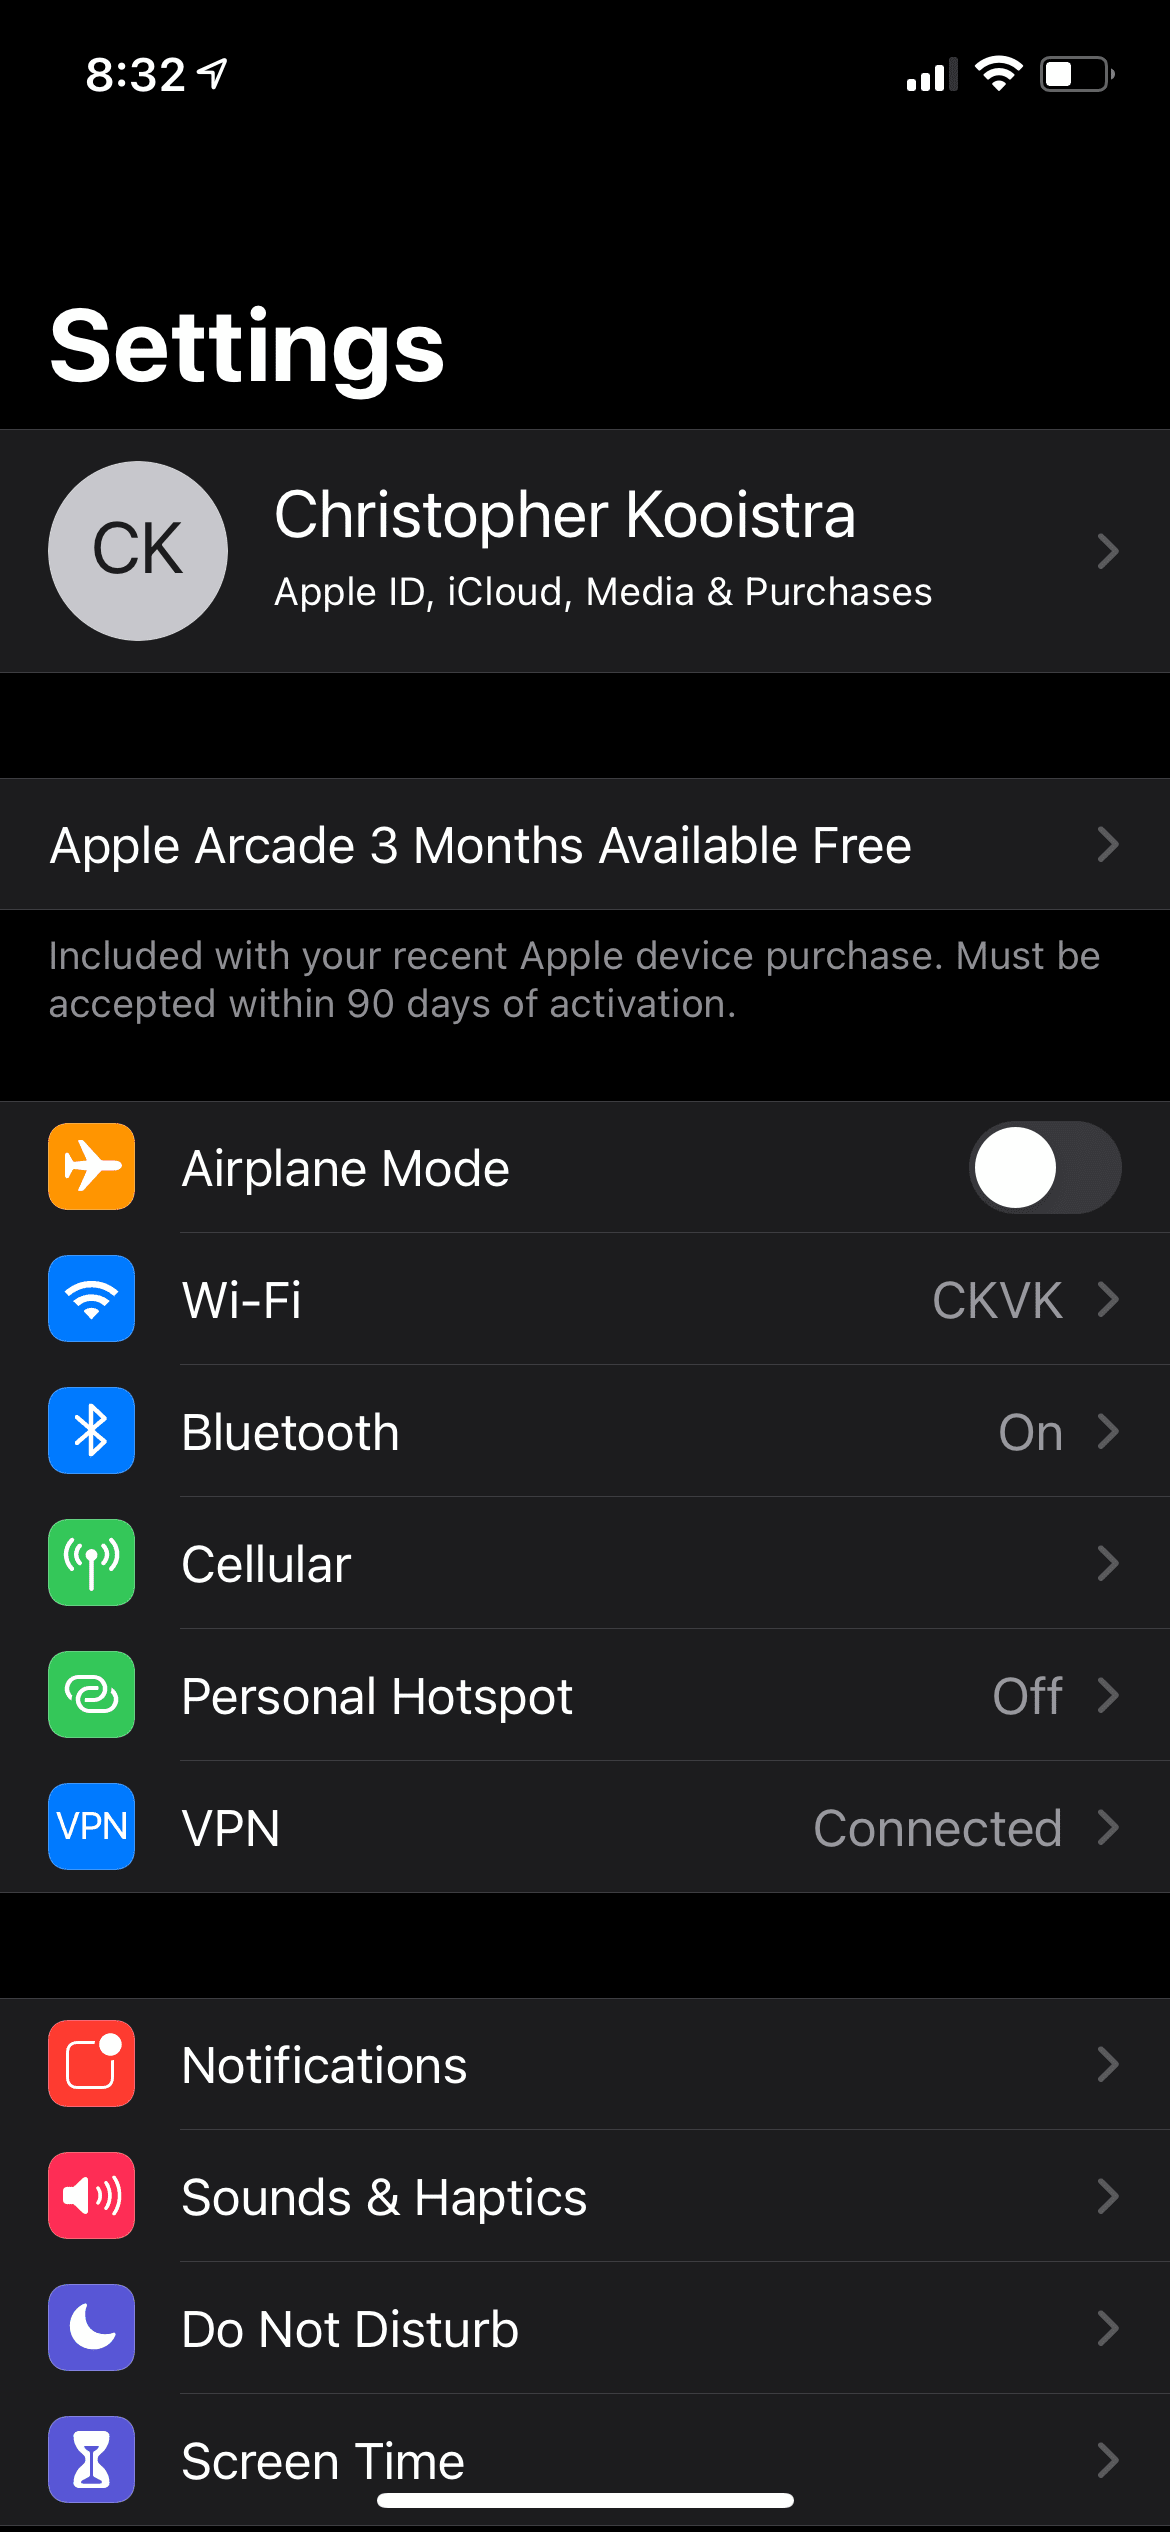 iCloud settings screen on iPhone